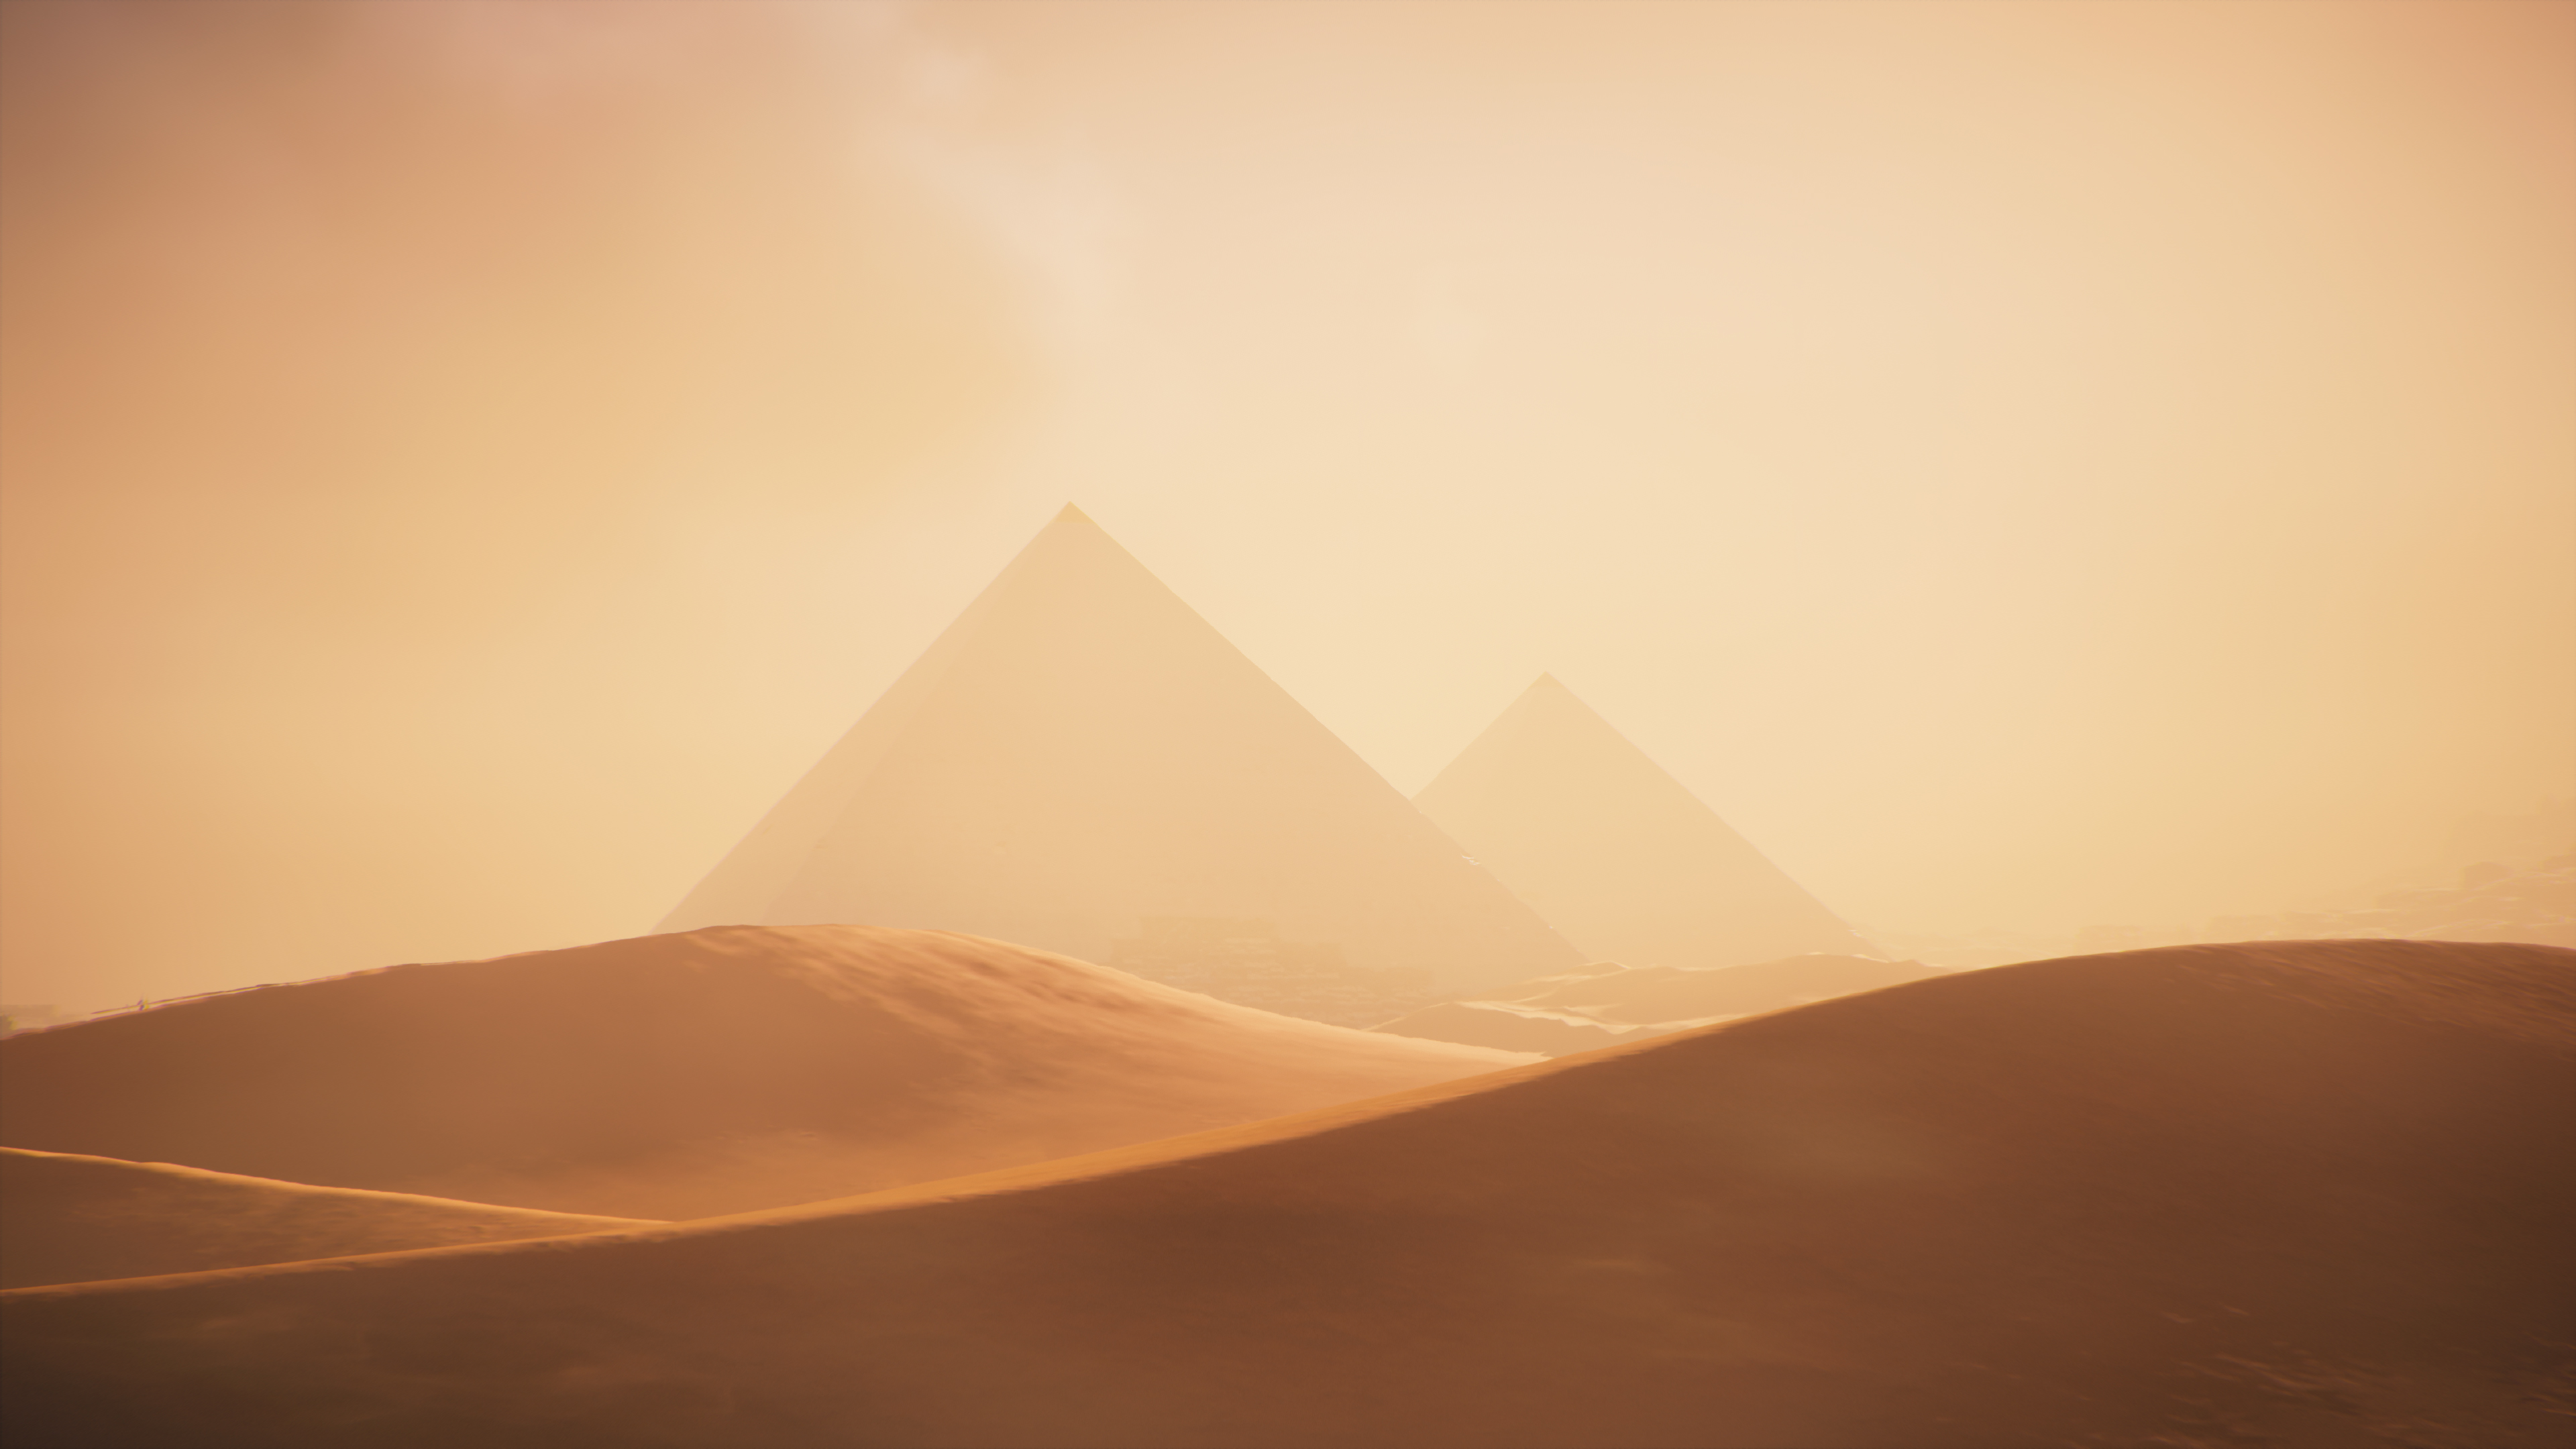 Pyramids Of Giza Assassins Creed Origins Desert Pyramid Video Games Egypt Sand Dunes 3840x2160